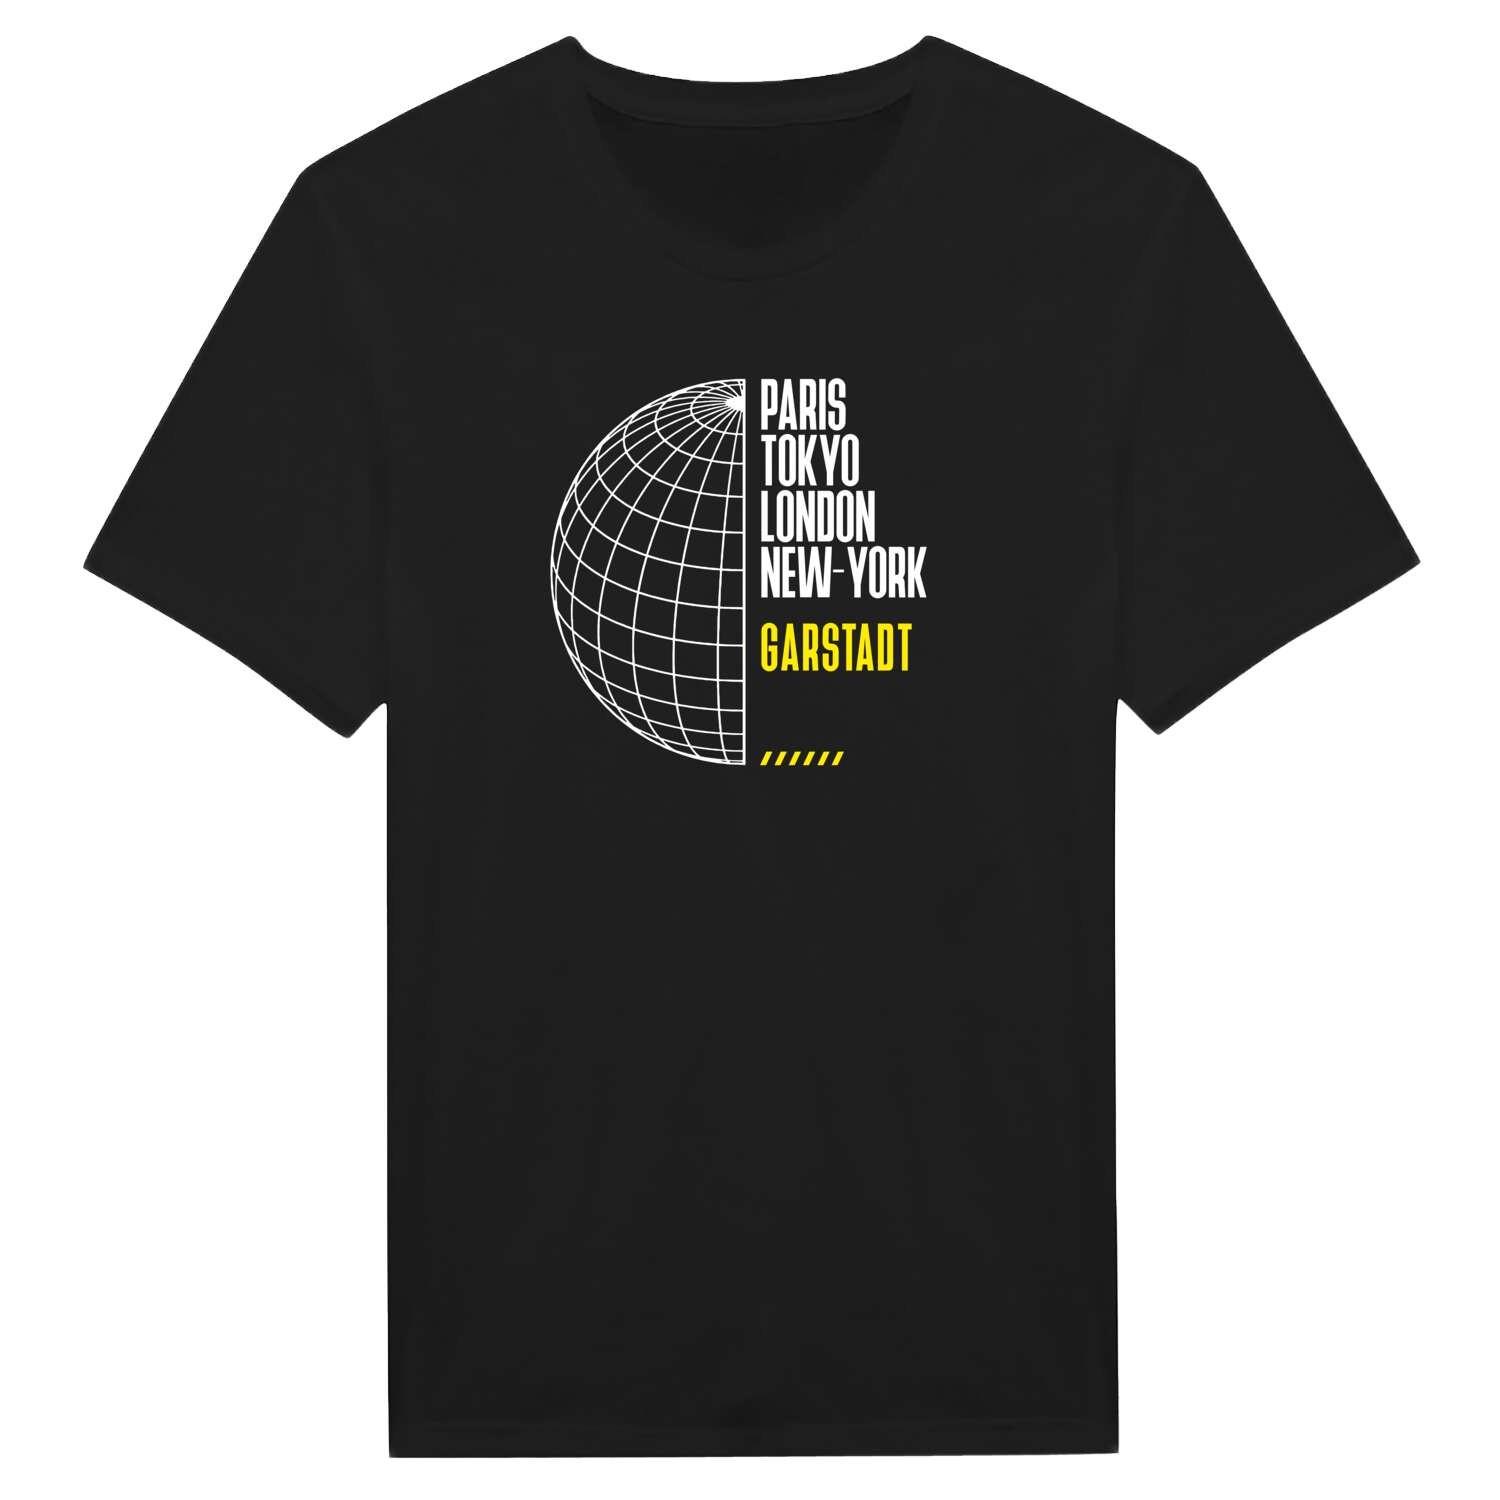 Garstadt T-Shirt »Paris Tokyo London«